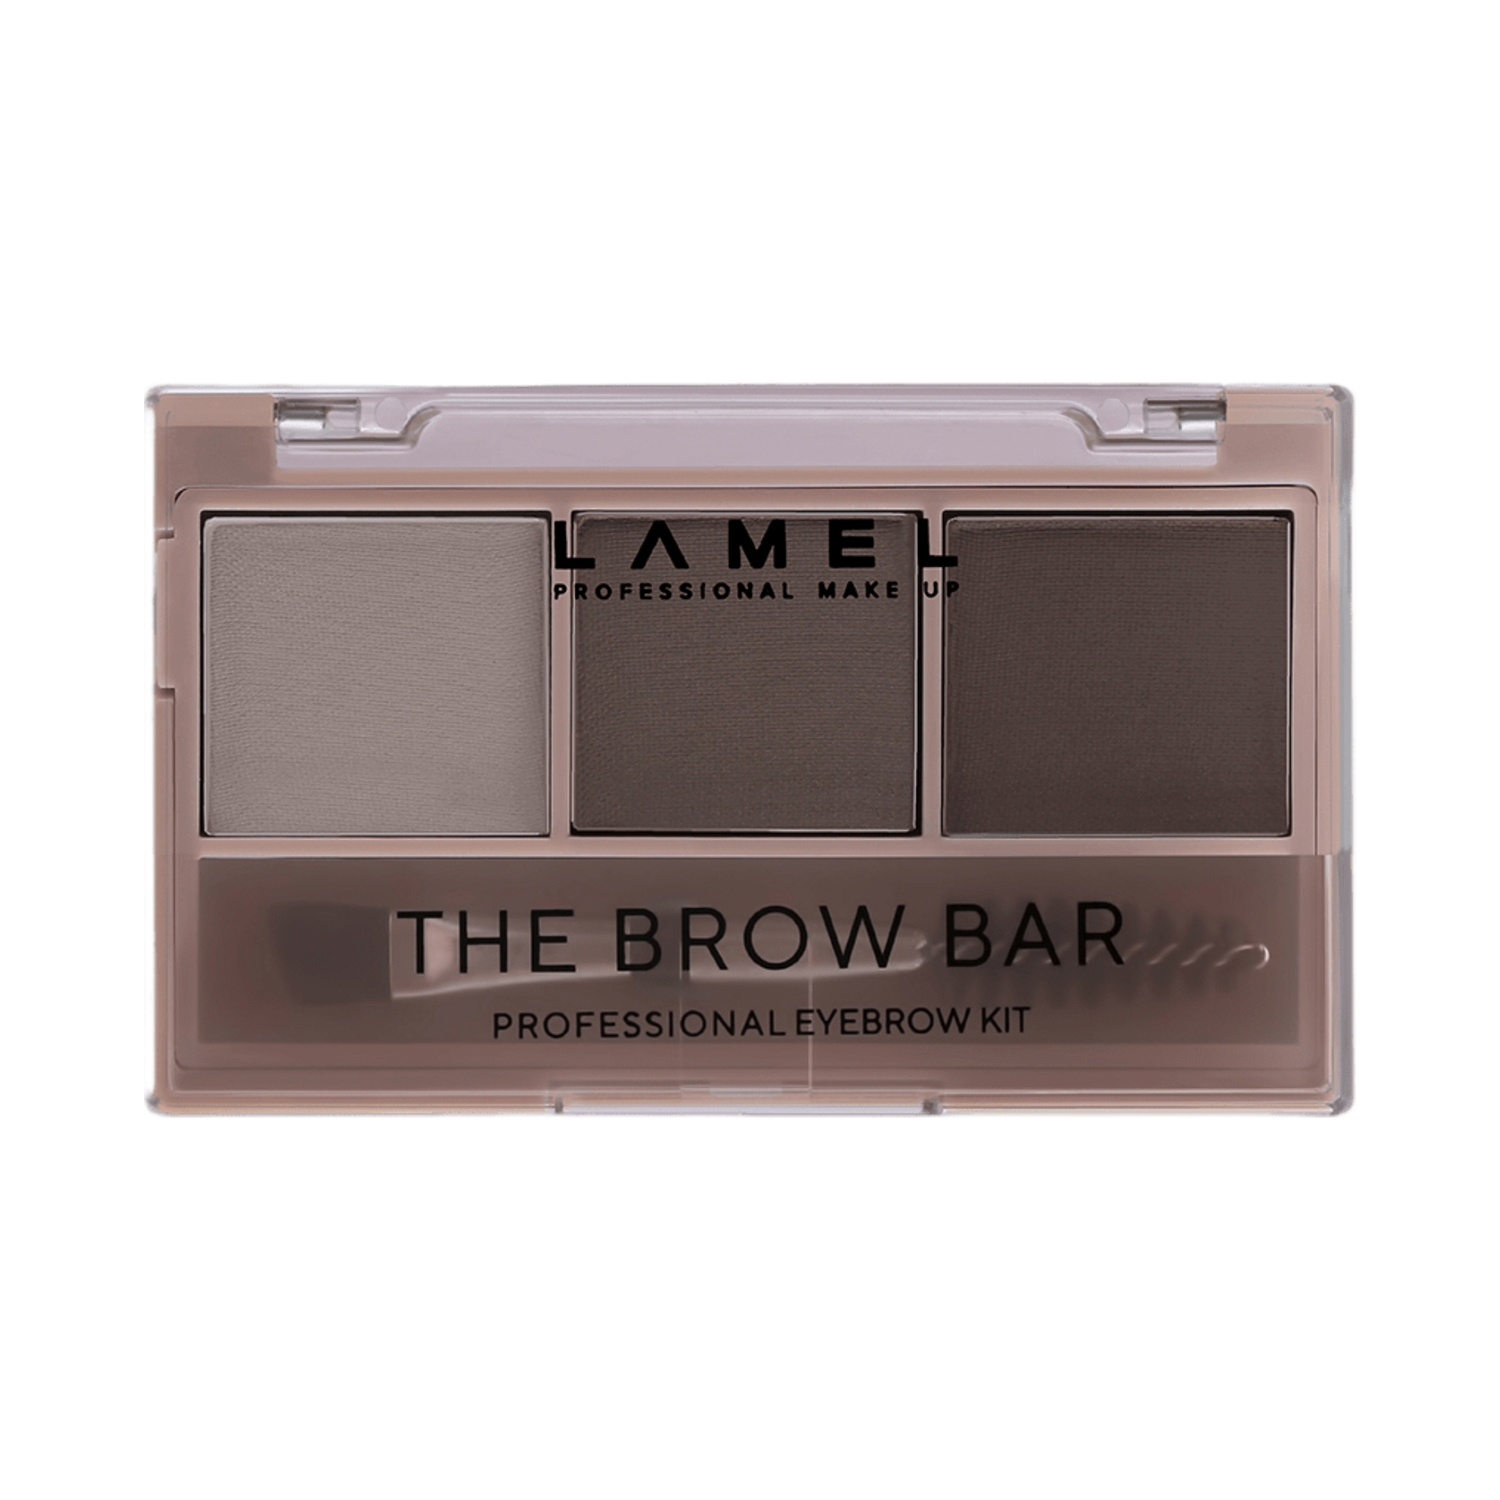 Lamel The Brow Bar Professional Eyebrow Kit - N 402 Dark Brown (4.5g)